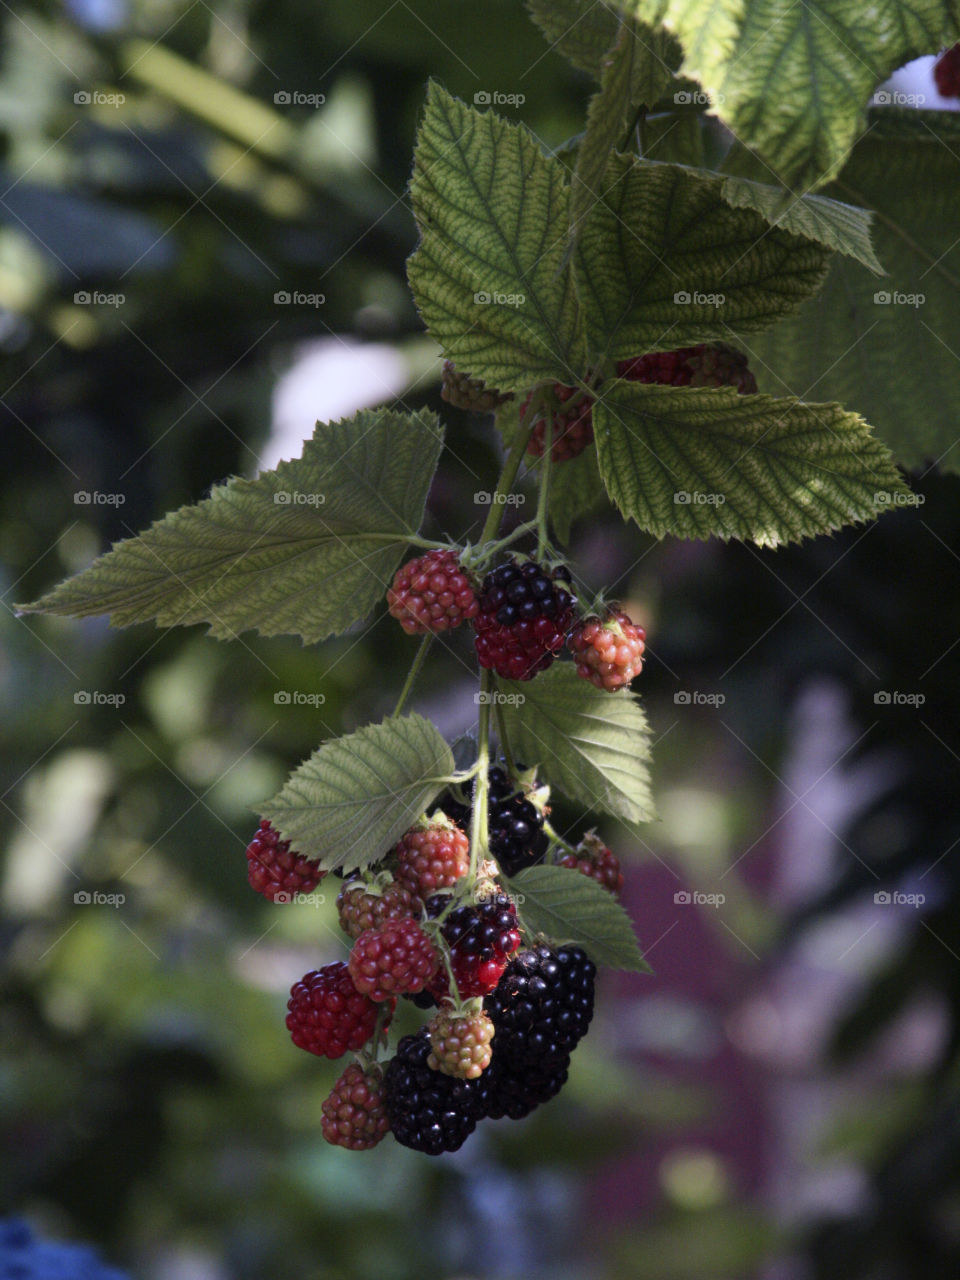 Berries in the sun